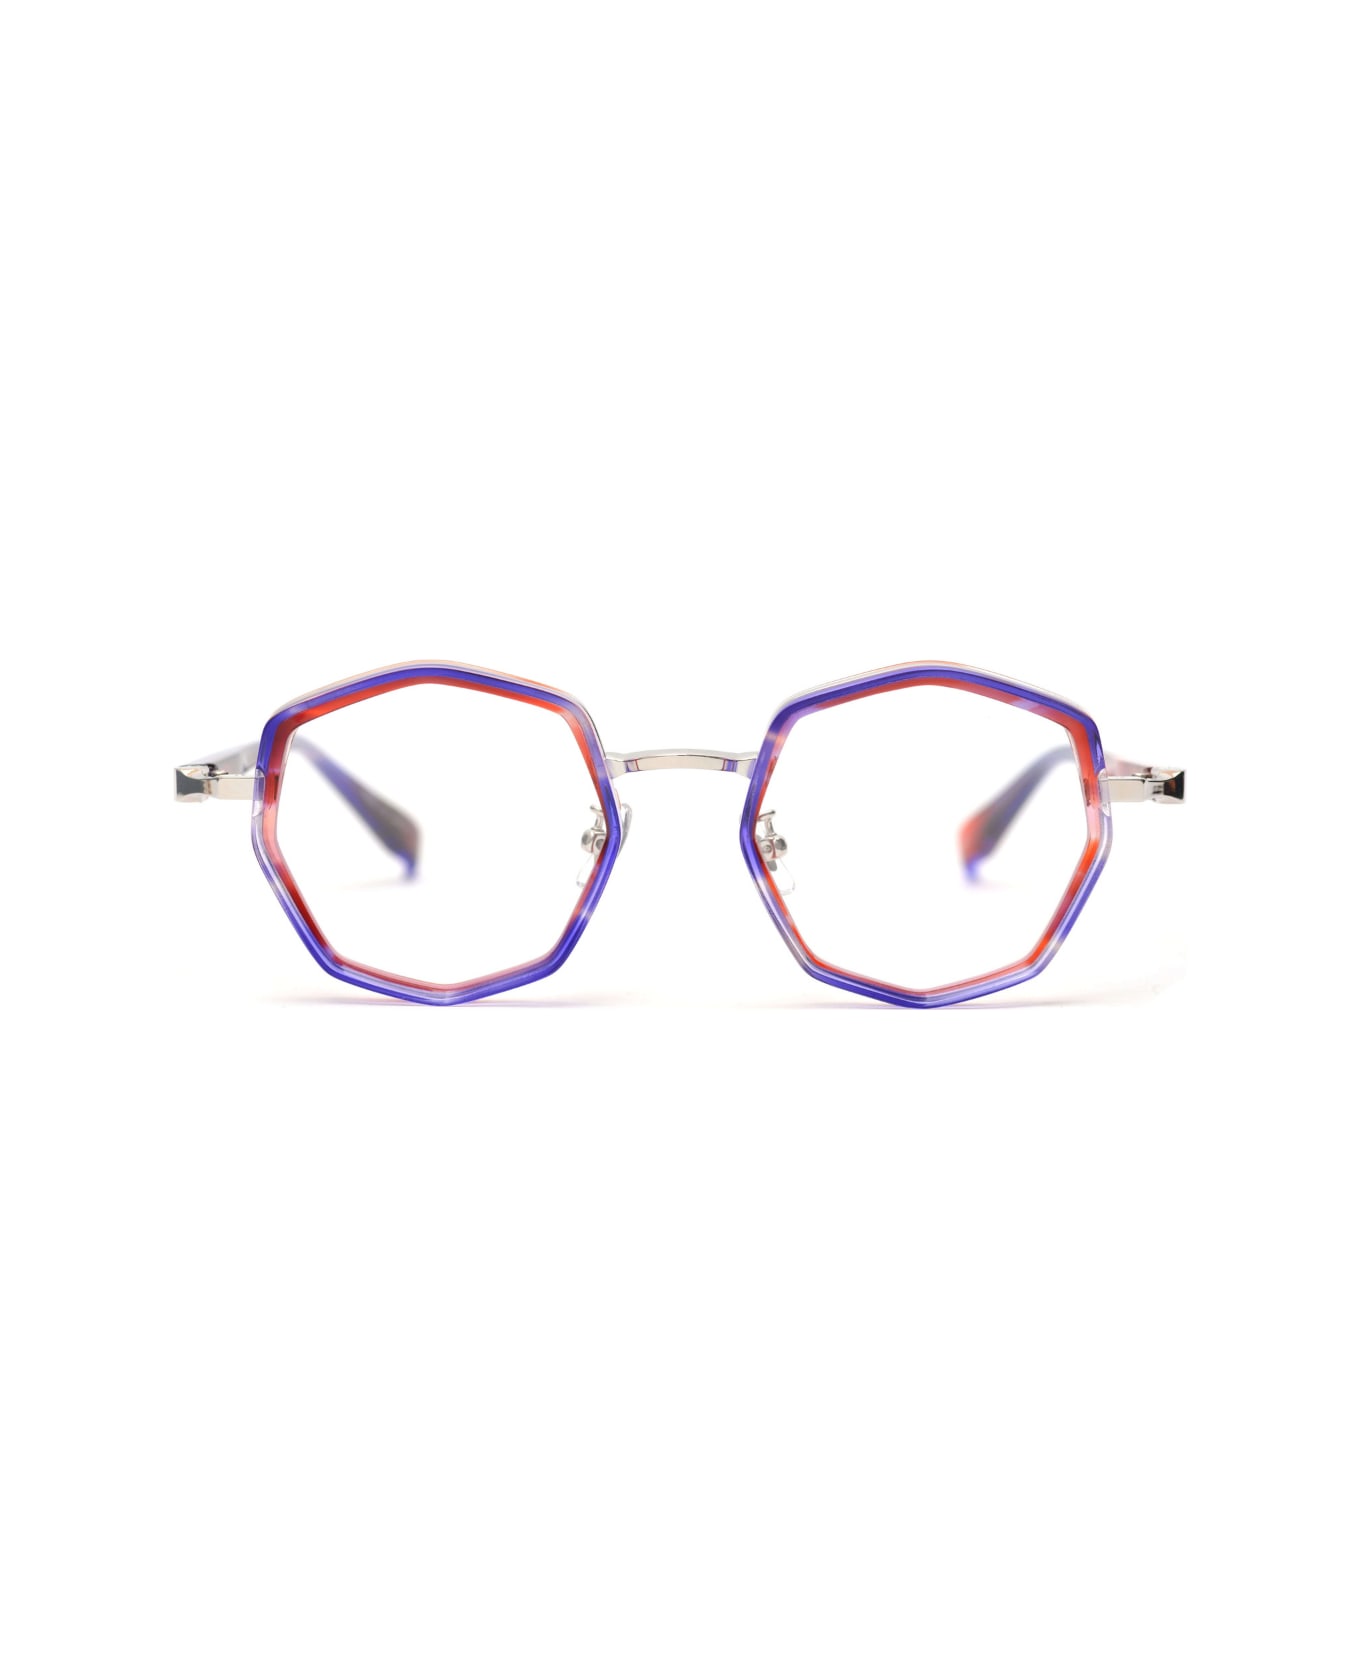 FACTORY900 Rf 055 369 Glasses - Multi-color - Silver/Red/Purple